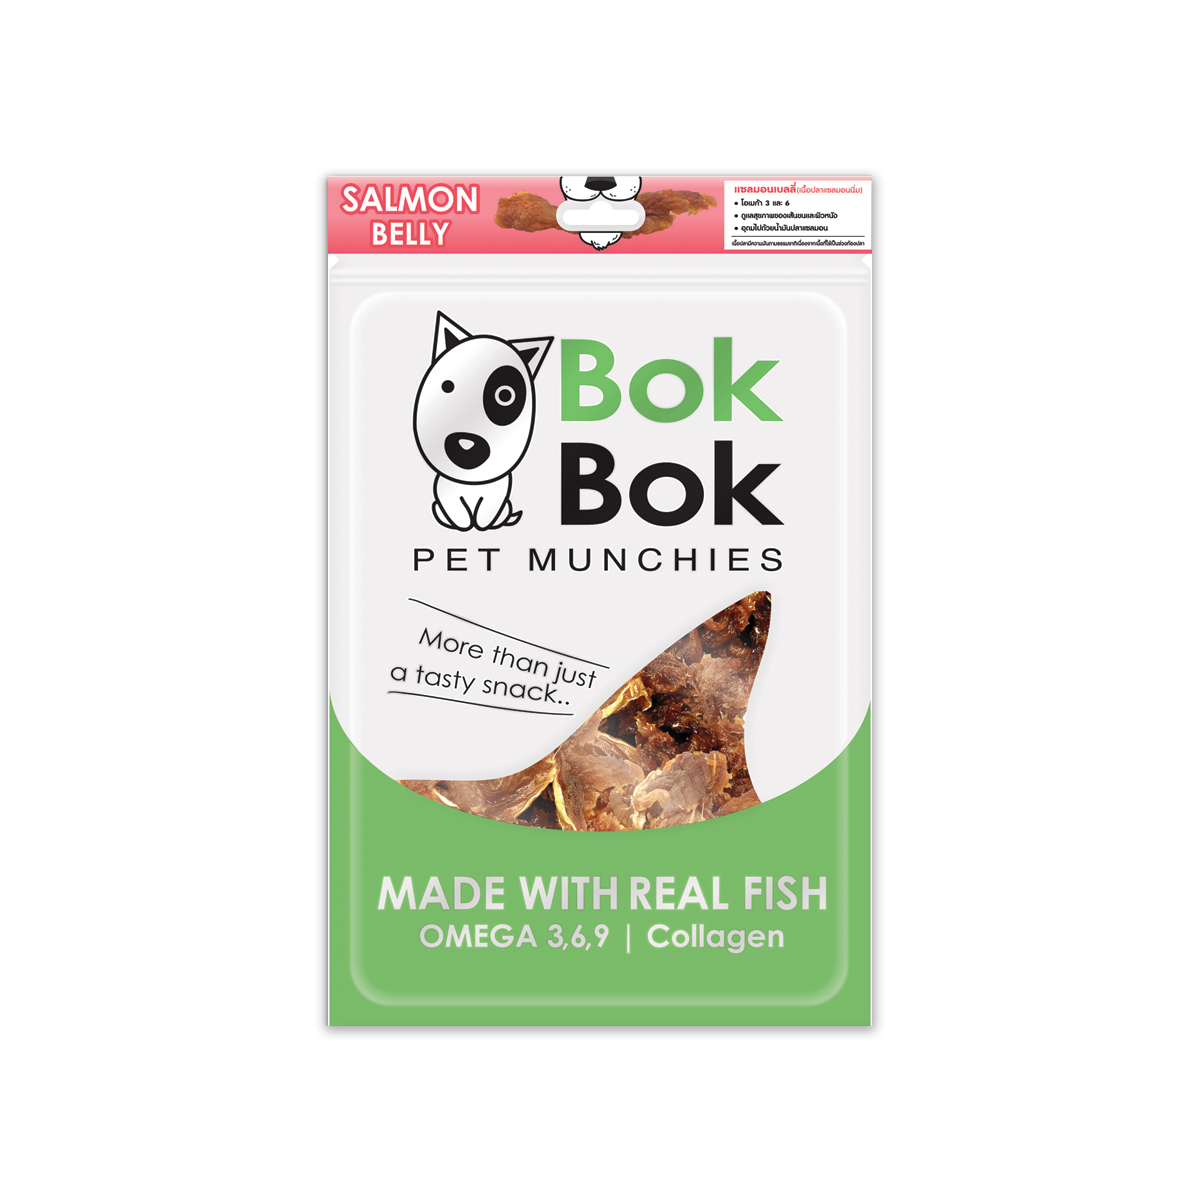 Bok Bok Salmon Belly Dog Snack  บ็อก บ็อก ขนมสุนัข เนื้อปลาแซลมอนนิ่ม ขนาด 150 กรัม